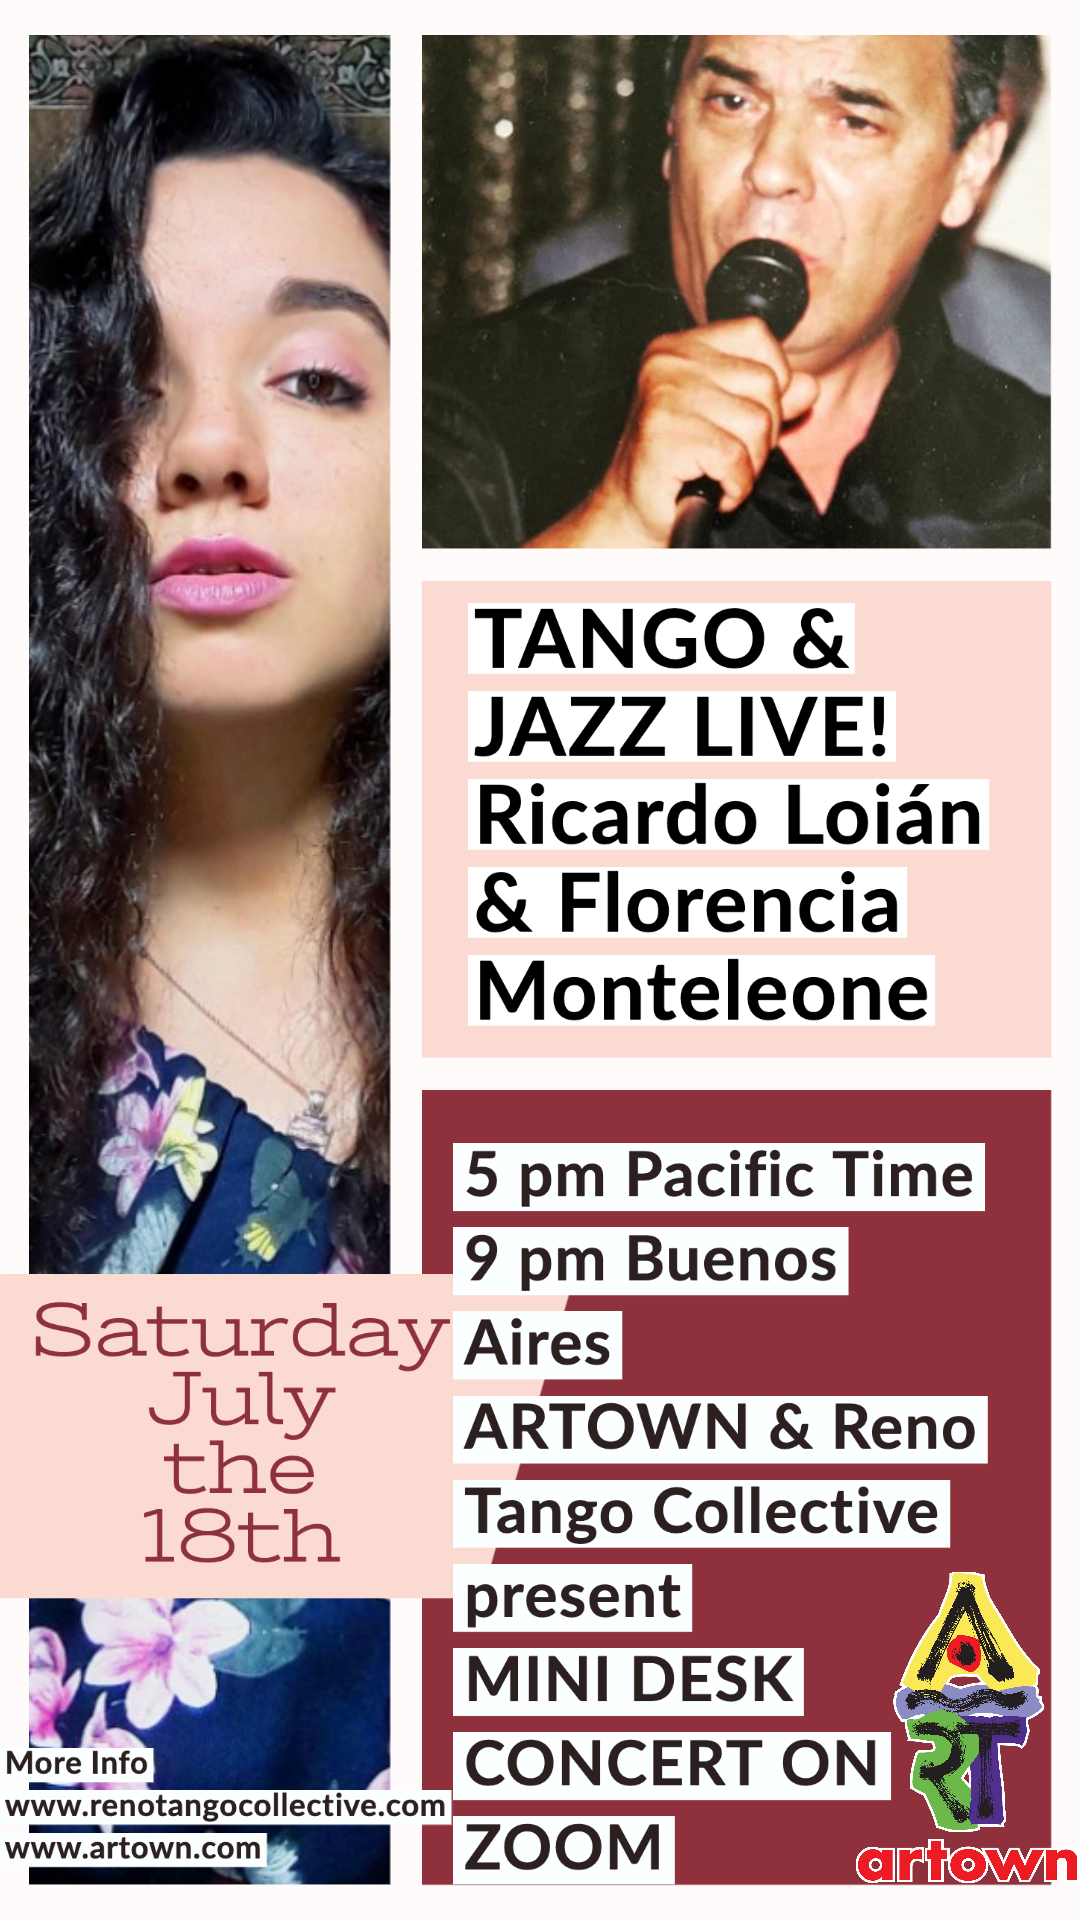 Tango & Jazz Concert